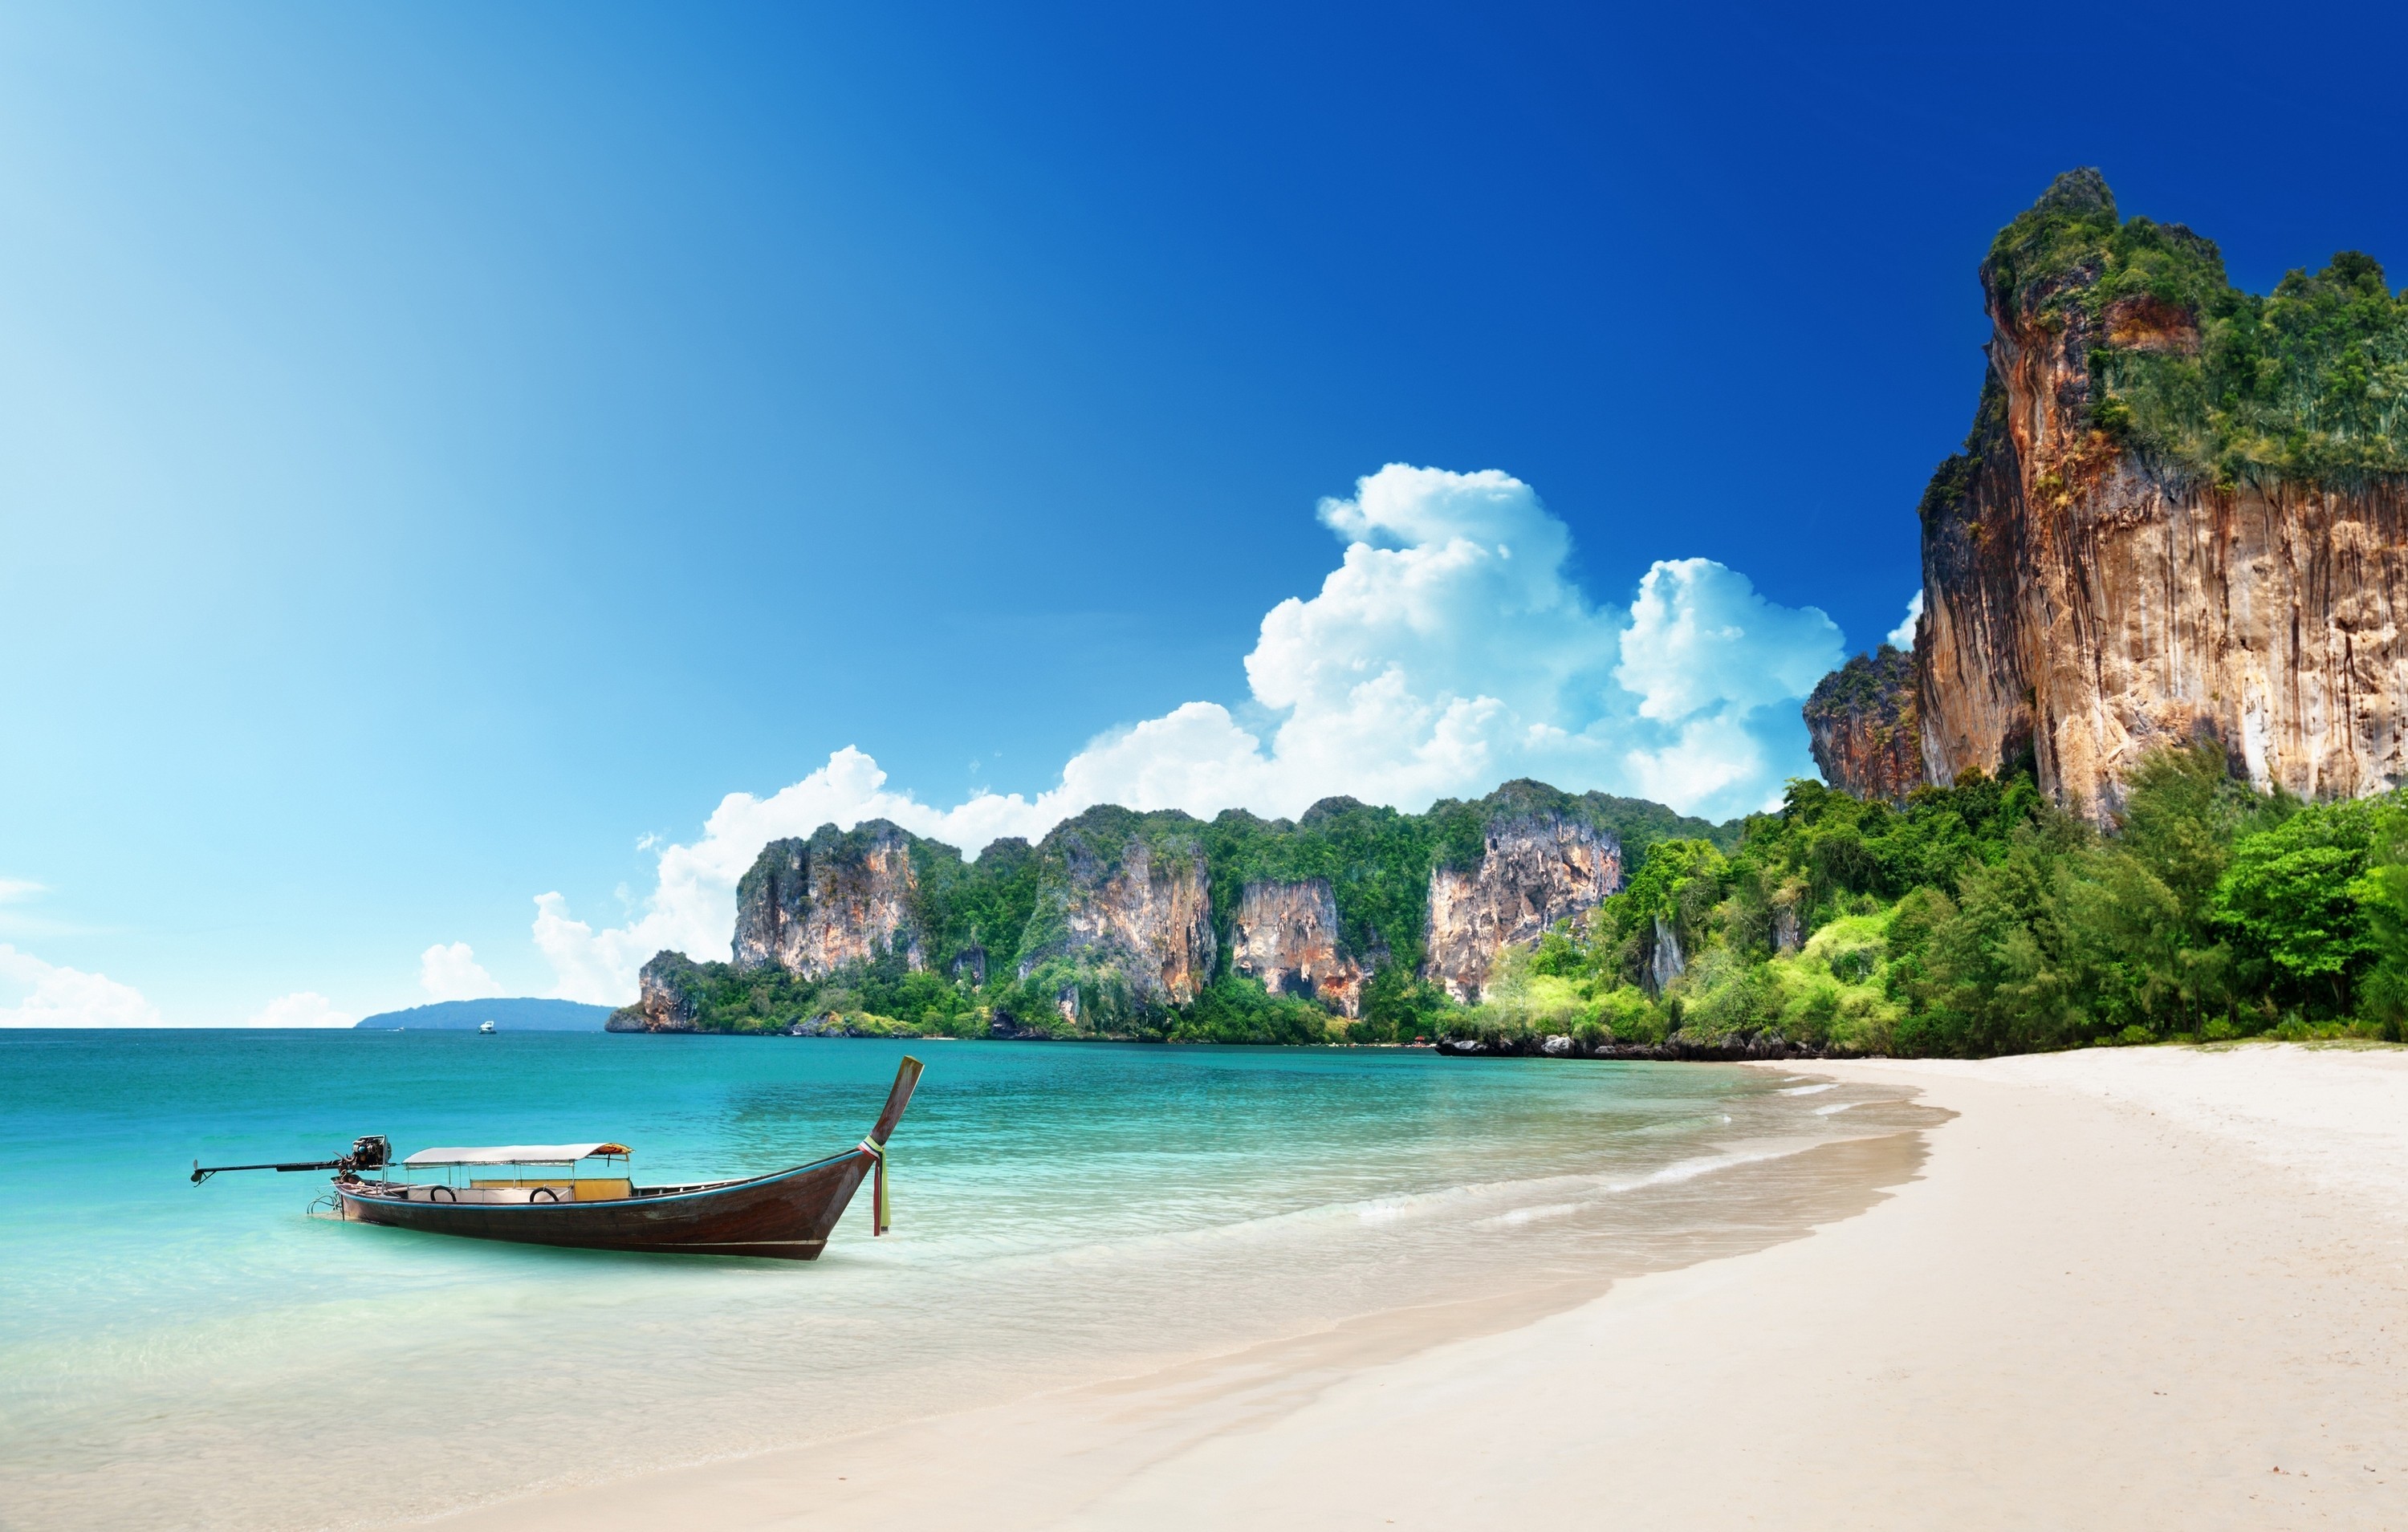 656235 descargar imagen playa, paisaje marino, tailandia, fotografía, tropico, barco, acantilado, costa, naturaleza, océano, zona tropical: fondos de pantalla y protectores de pantalla gratis